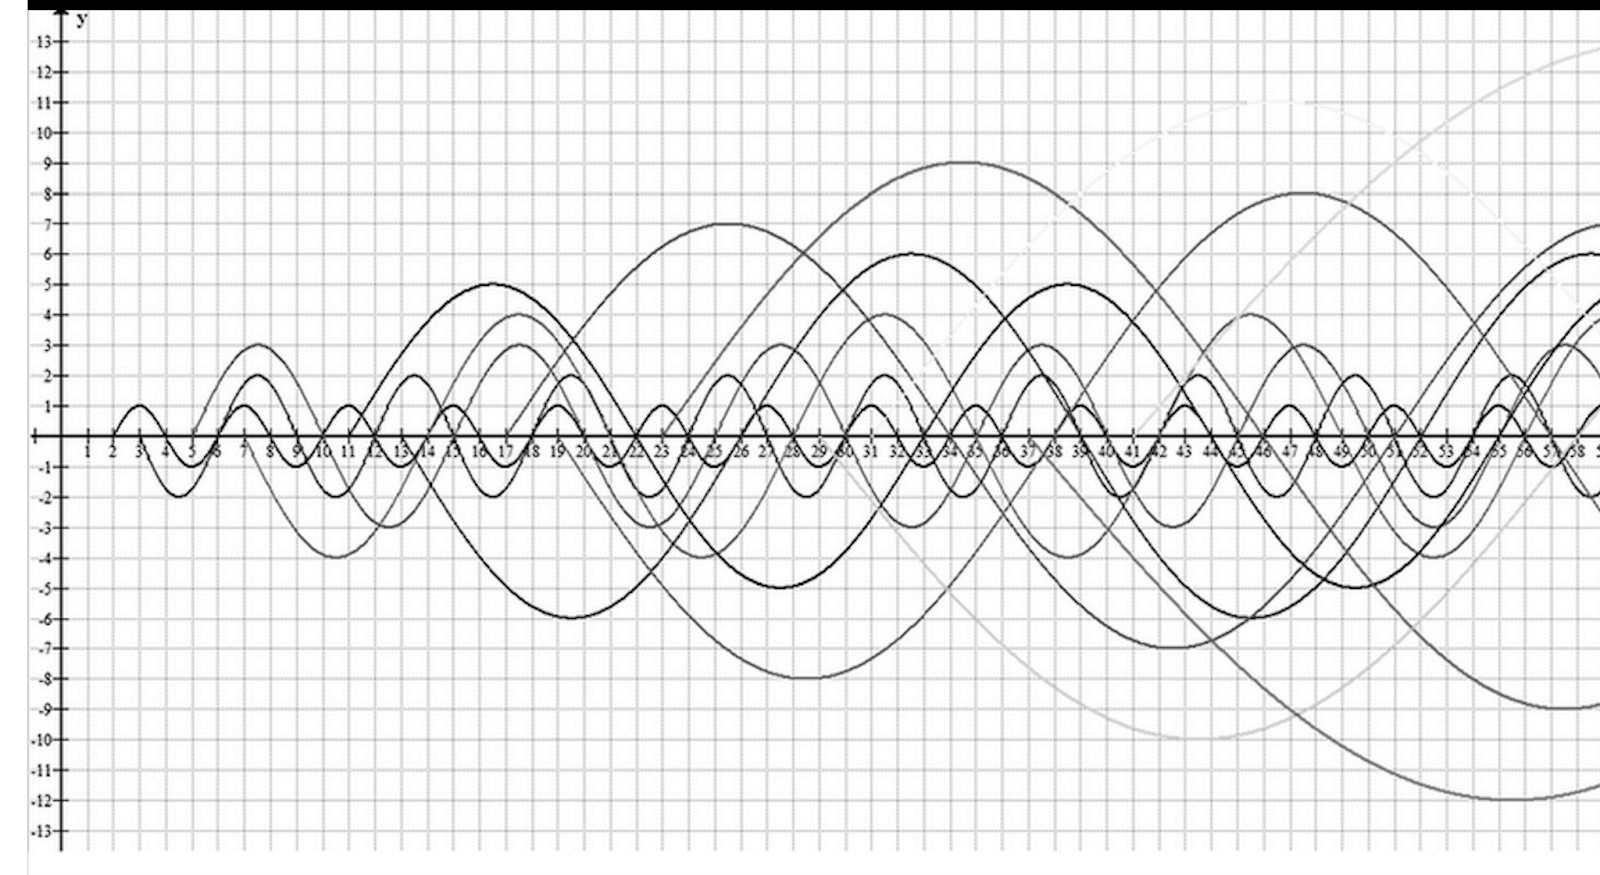 Sinusoidal form waves